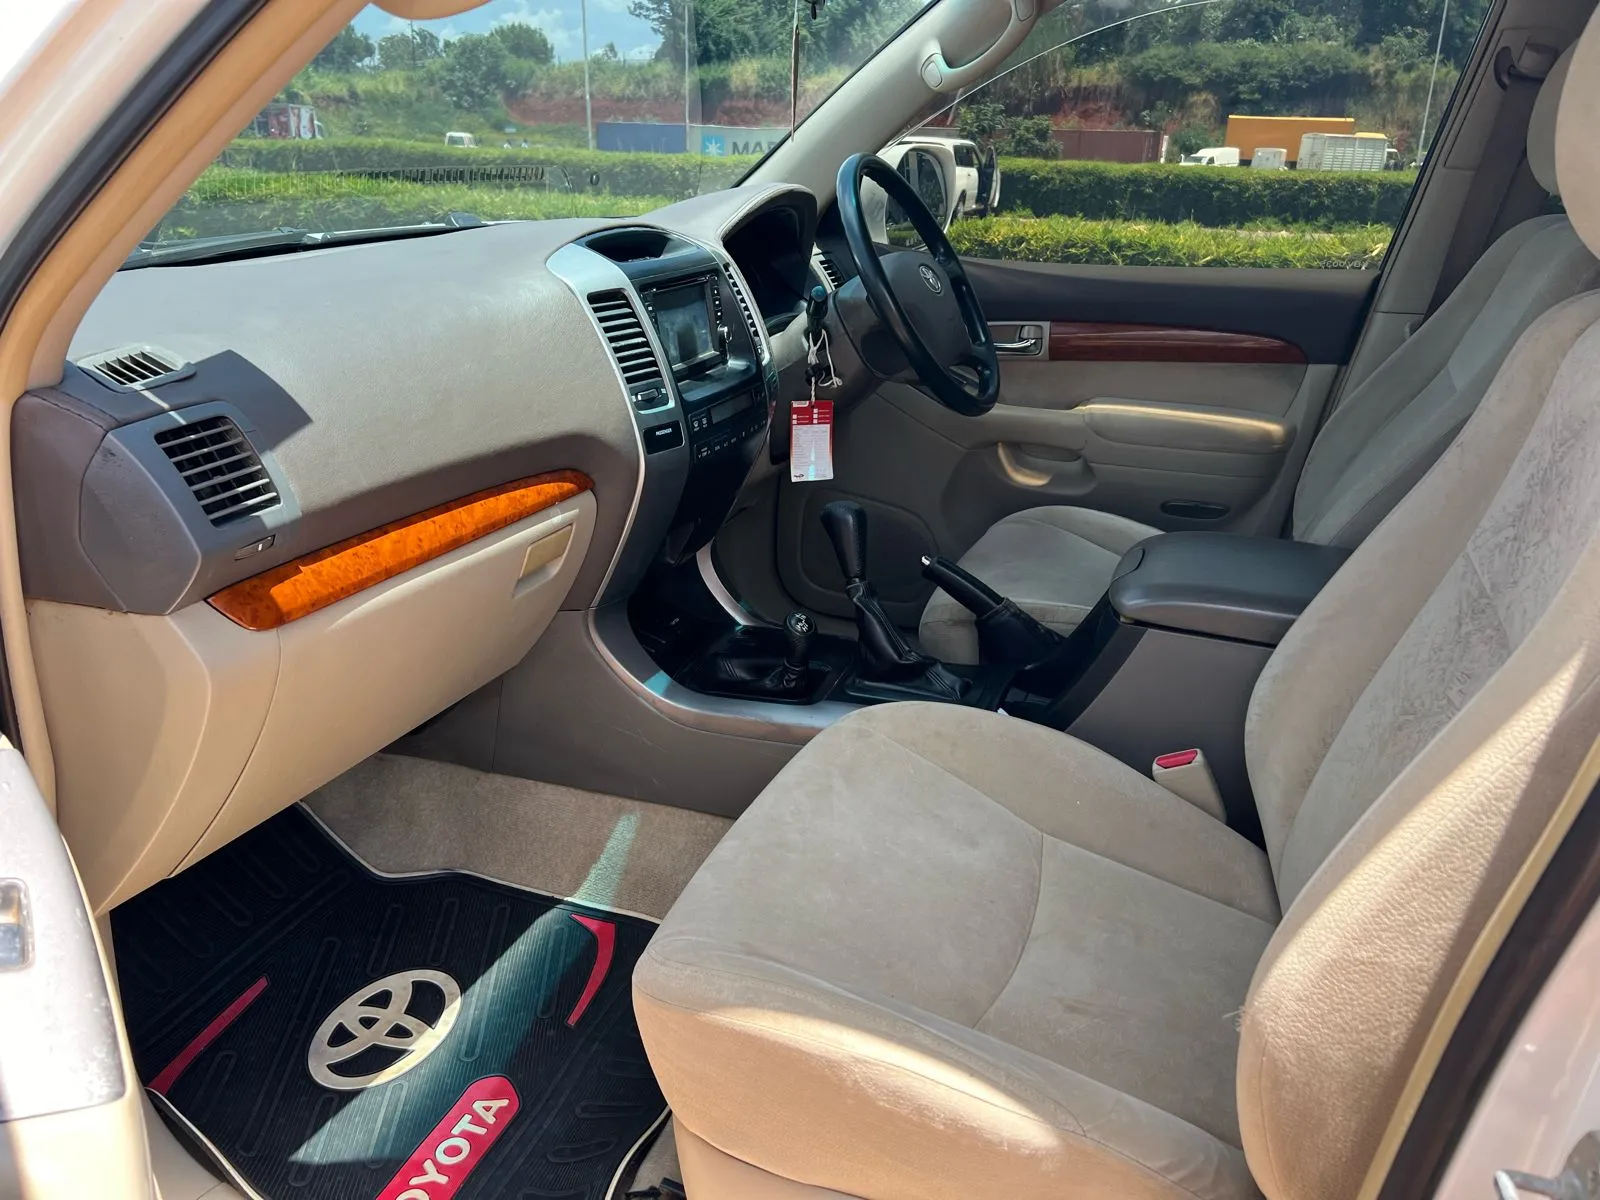 Toyota Prado J120 Kenya 🔥🔥 You Pay 40% Deposit Trade in OK EXCLUSIVE Toyota Prado j120 for sale in kenya hire purchase installments